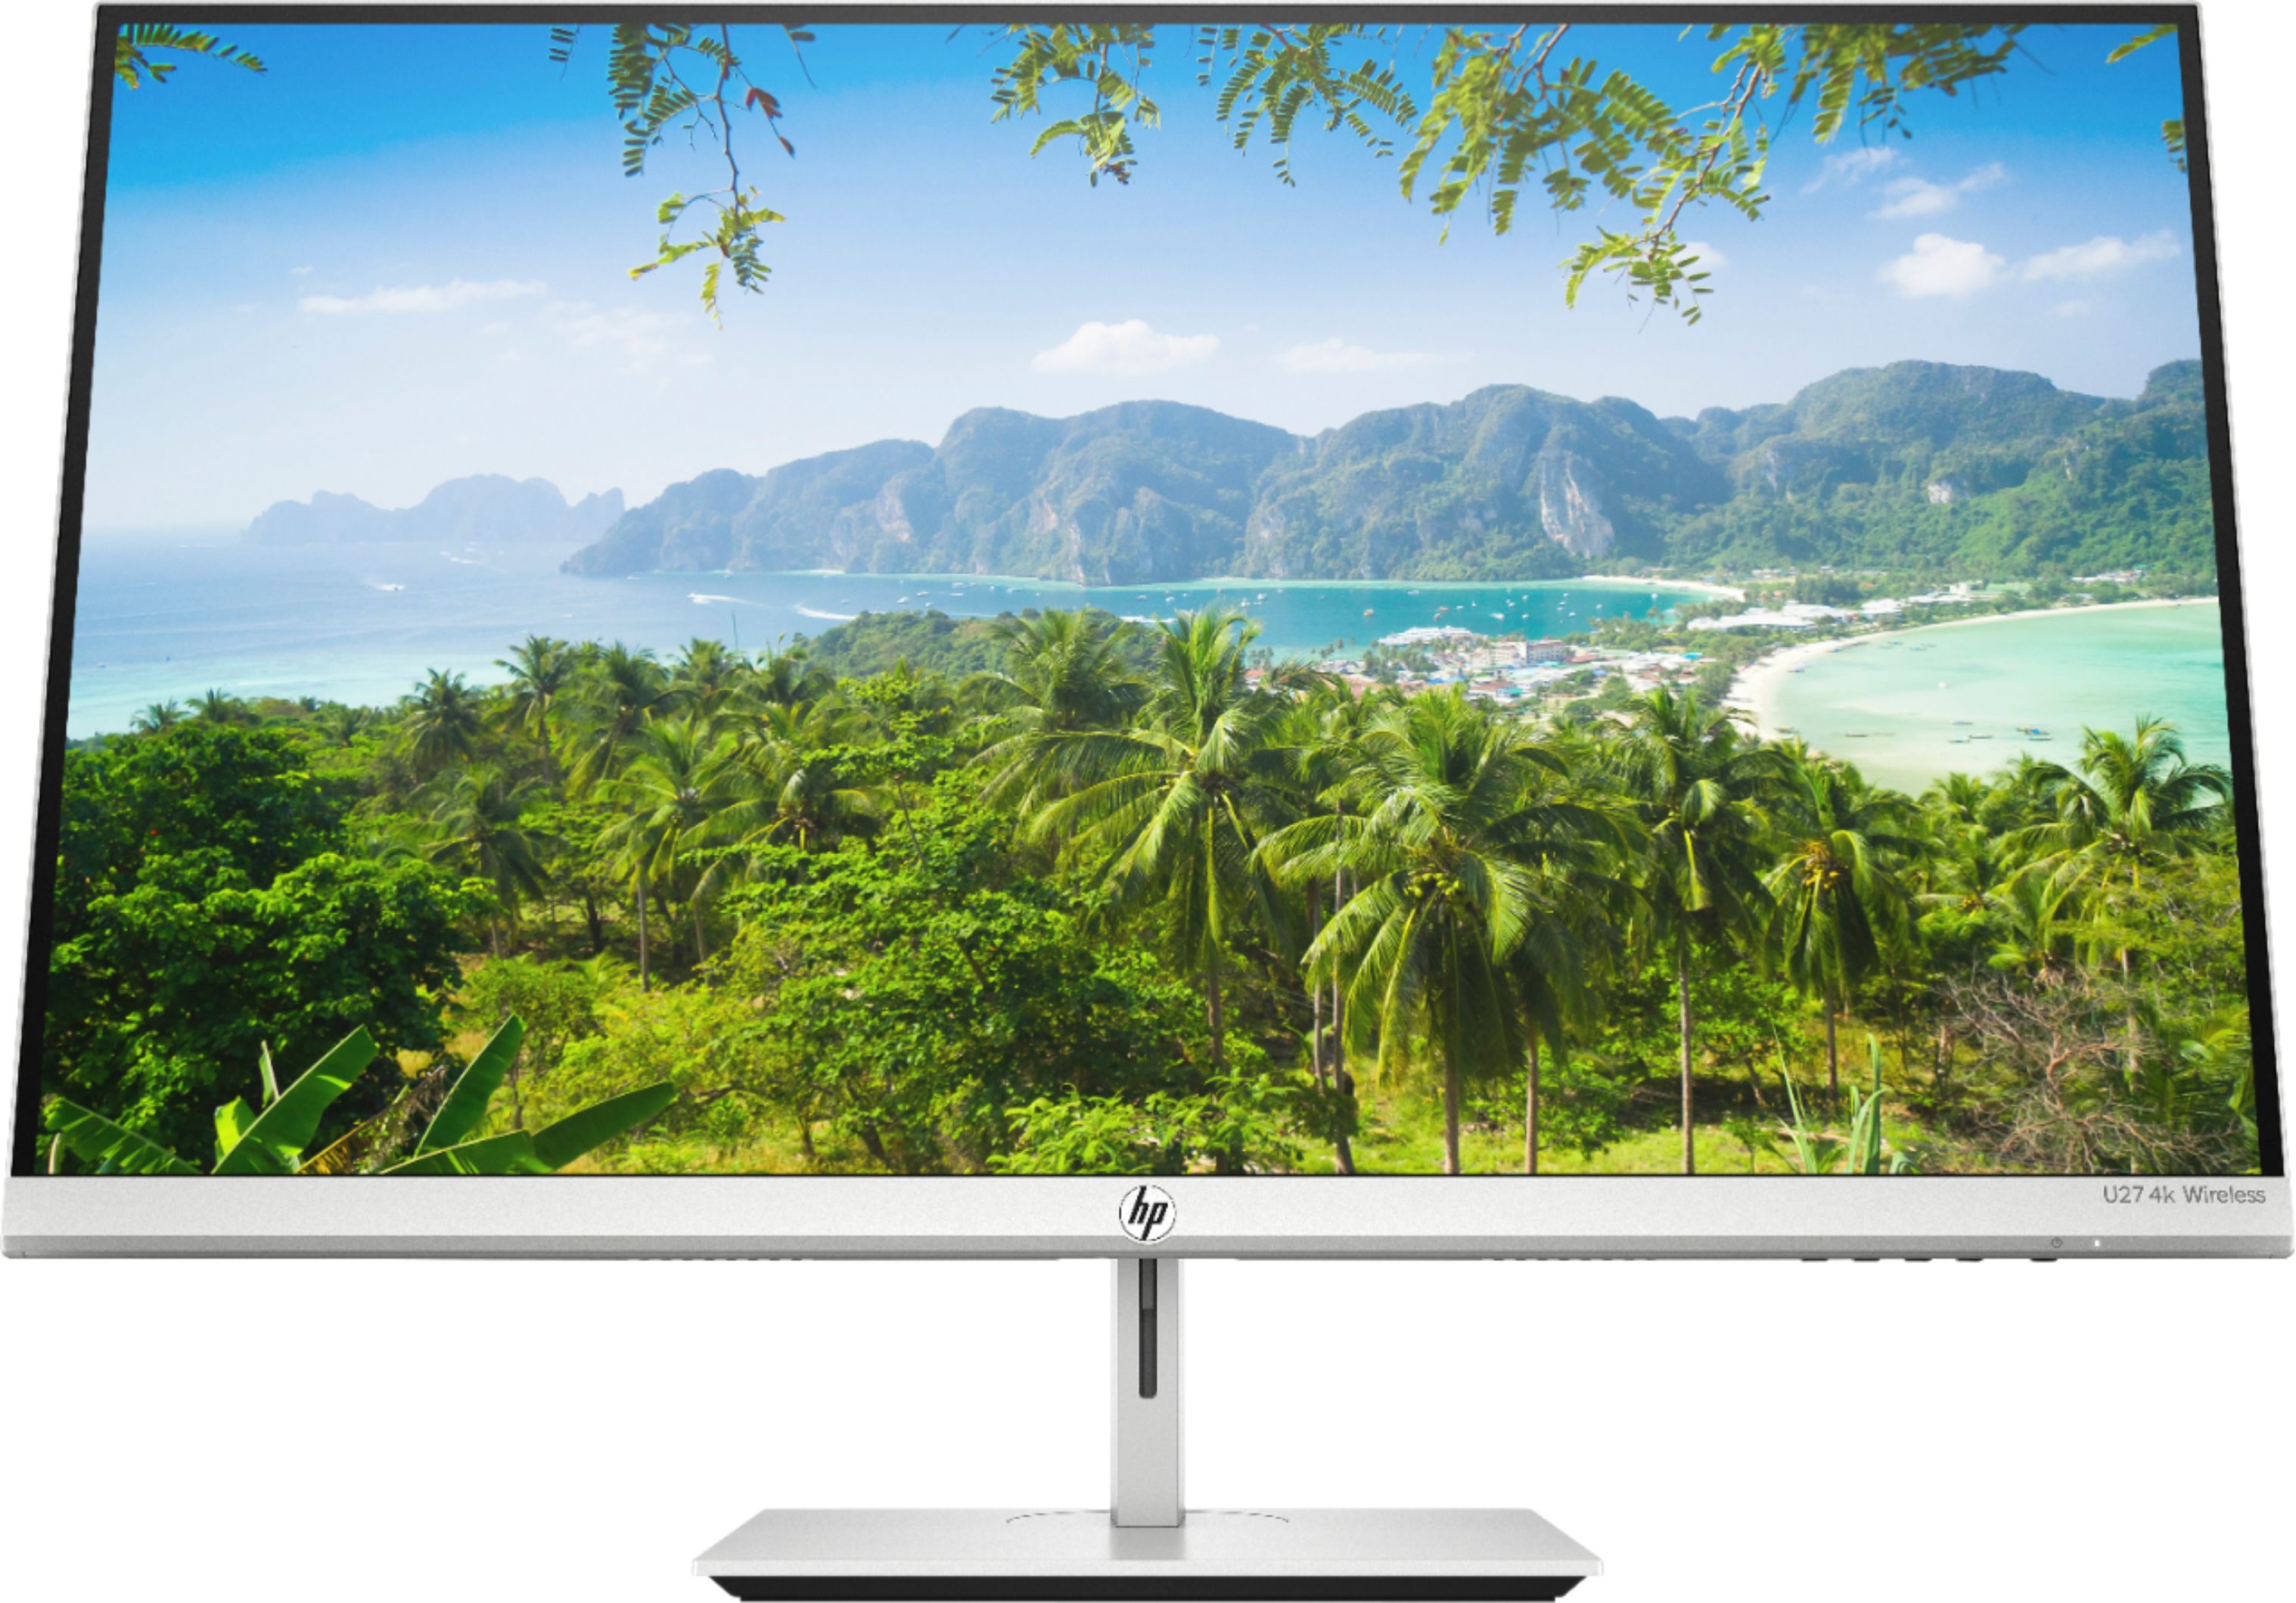 Enzovoorts Sceptisch hardop HP U27 27" IPS LED 4K UHD FreeSync Monitor (DisplayPort, HDMI, USB) Natural  Silver U27 4K Wireless - Best Buy